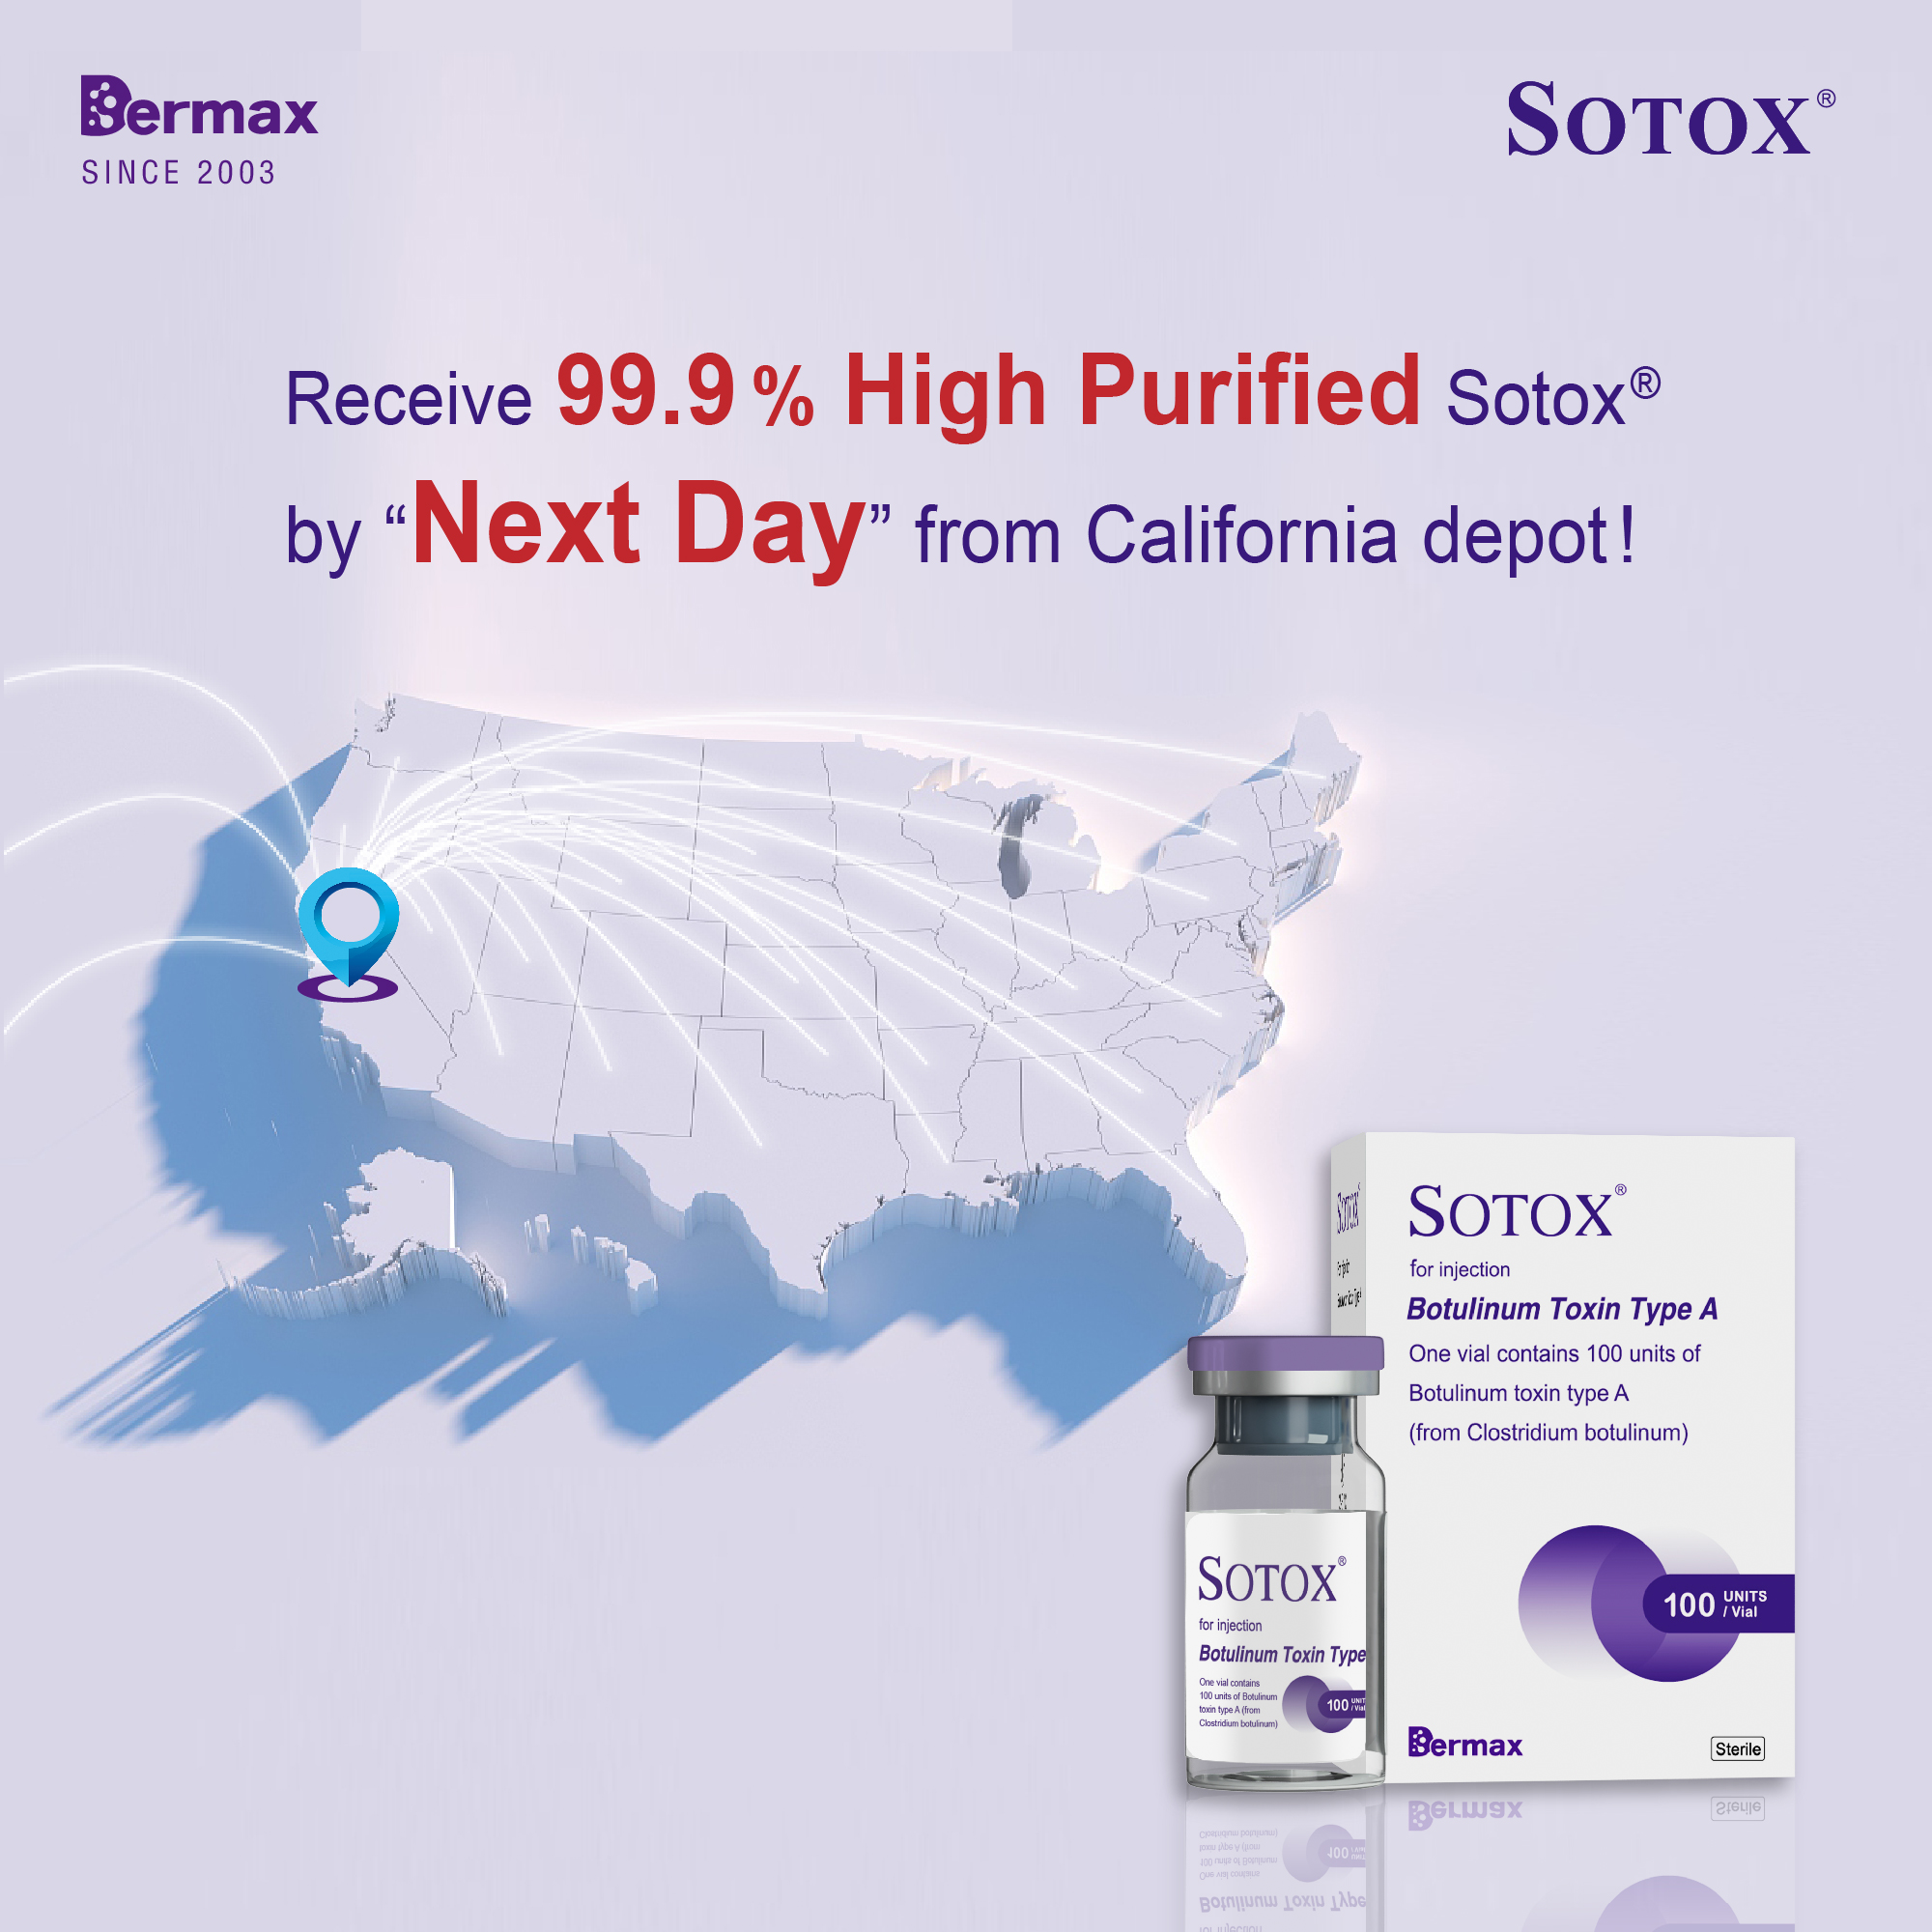 Where To Buy Botulinum Toxin Sotox？